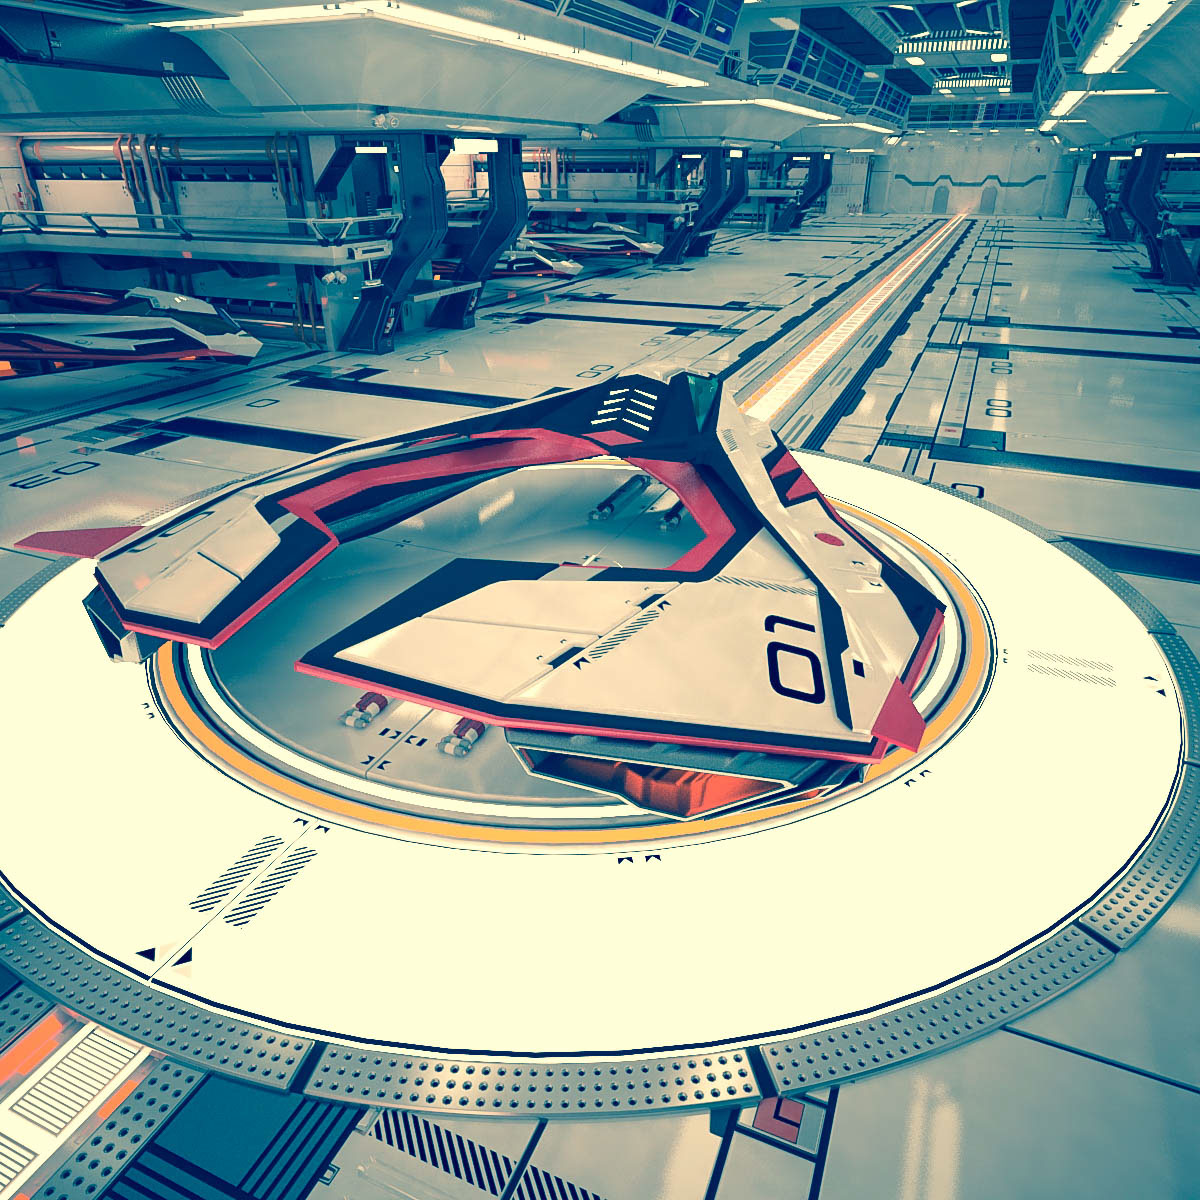 SciFi Spaceship Interior Design 3D Model on Behance